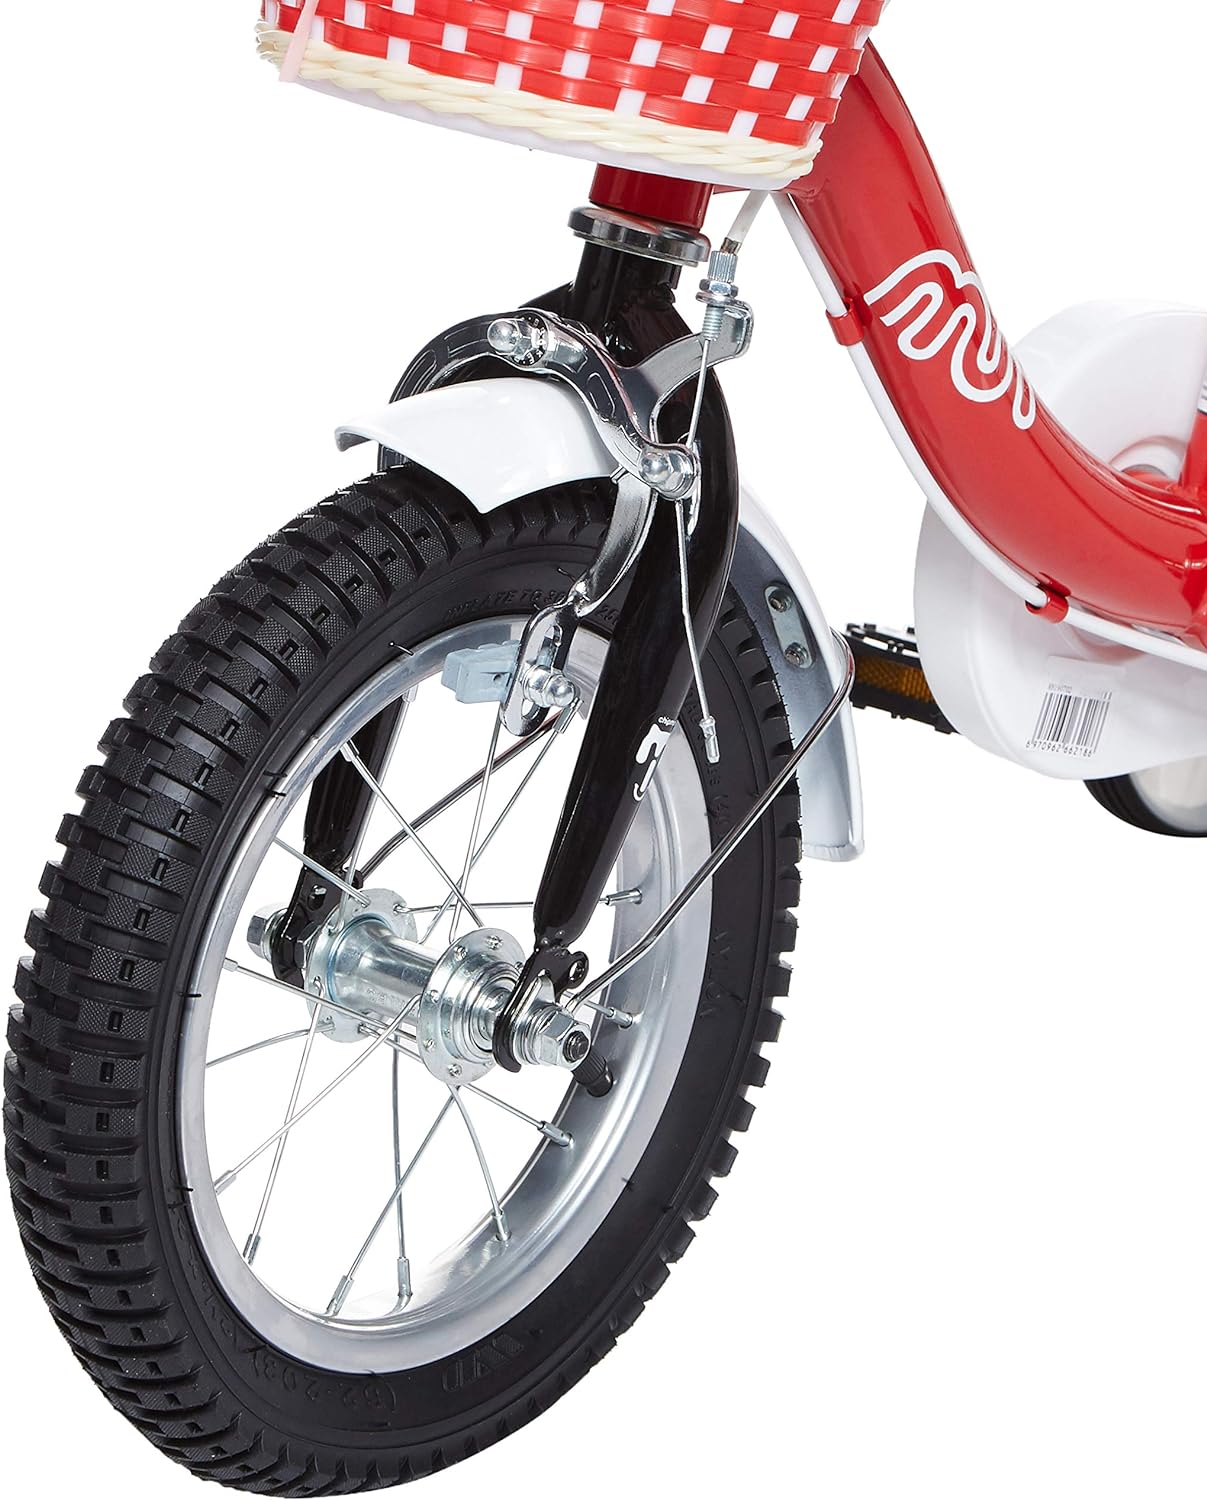 Chipmunk Kids Bike - MM 12" Red - Laadlee